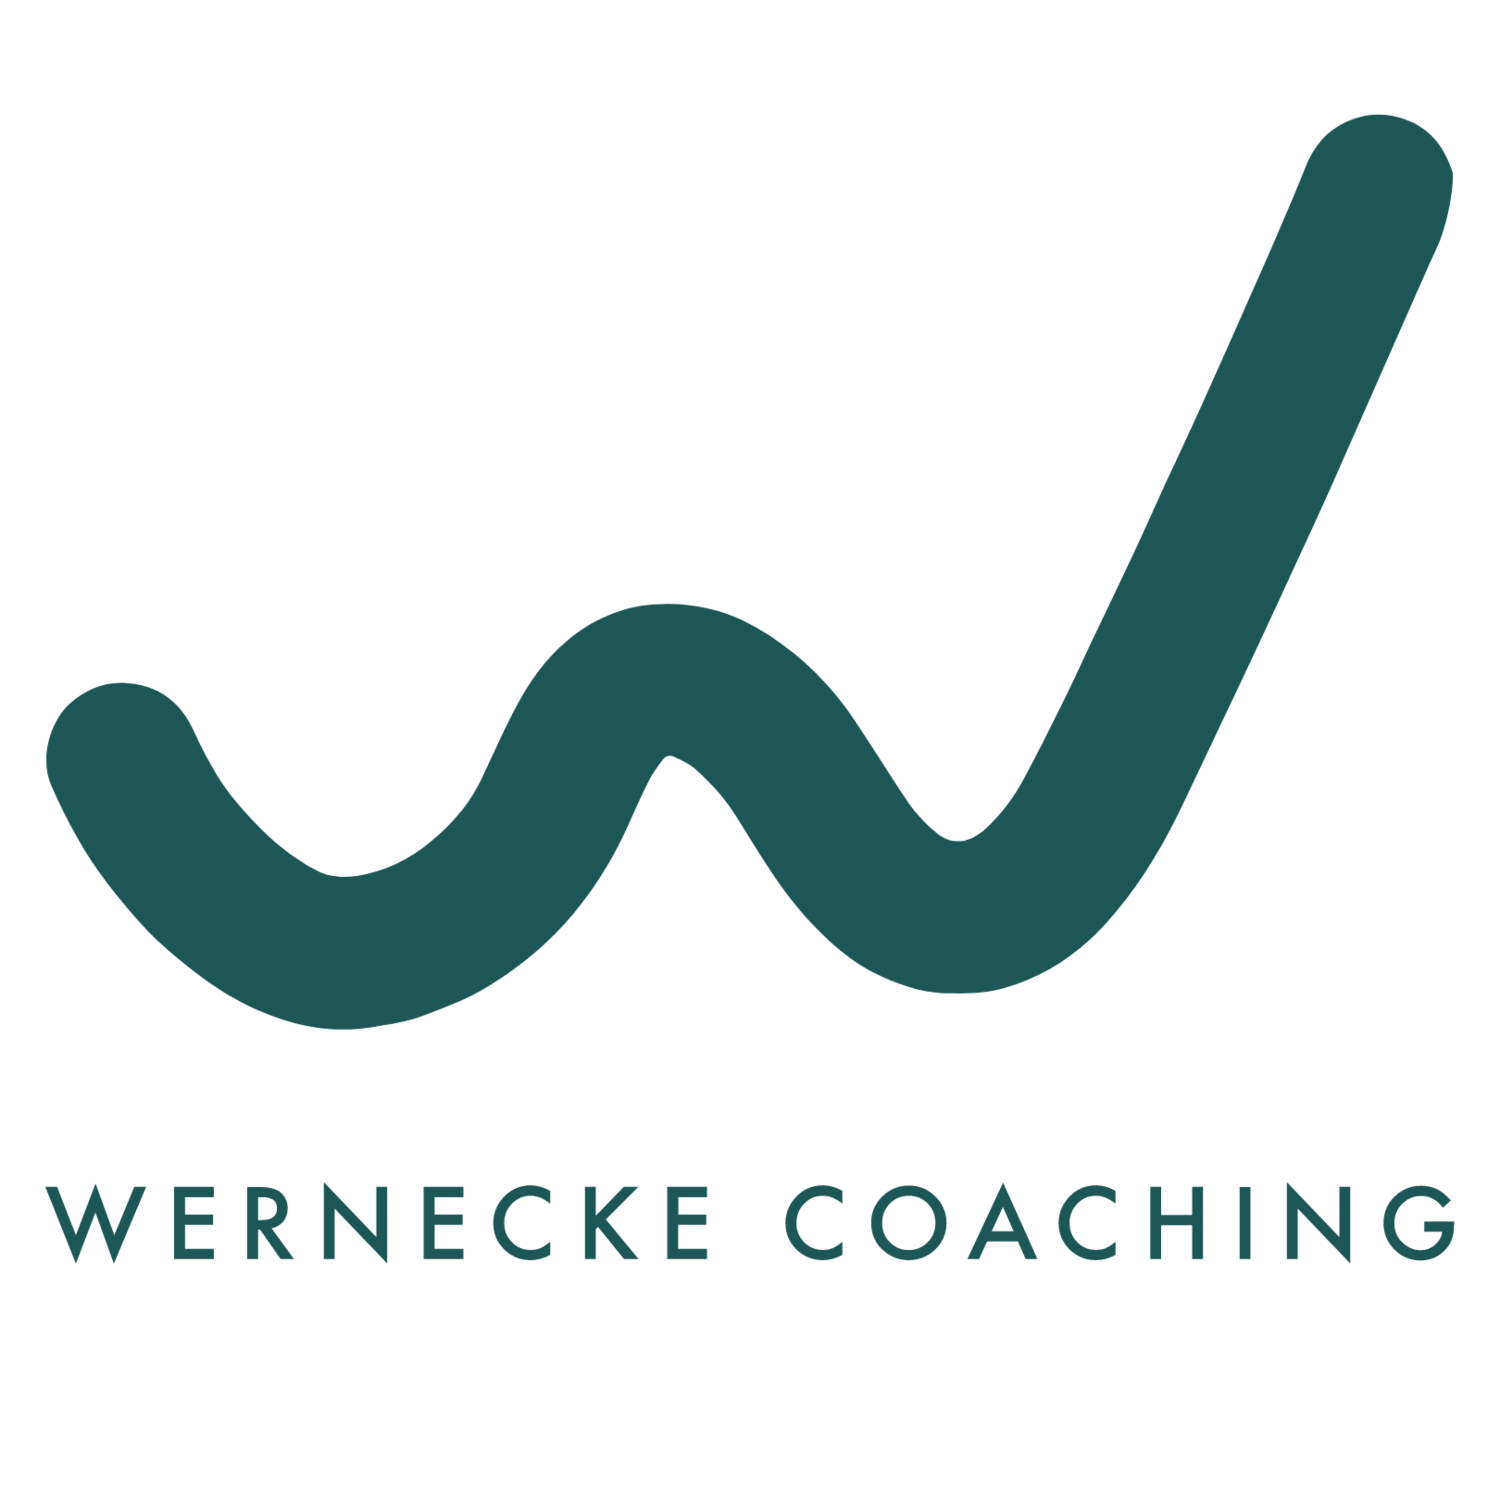 Wernecke Coaching